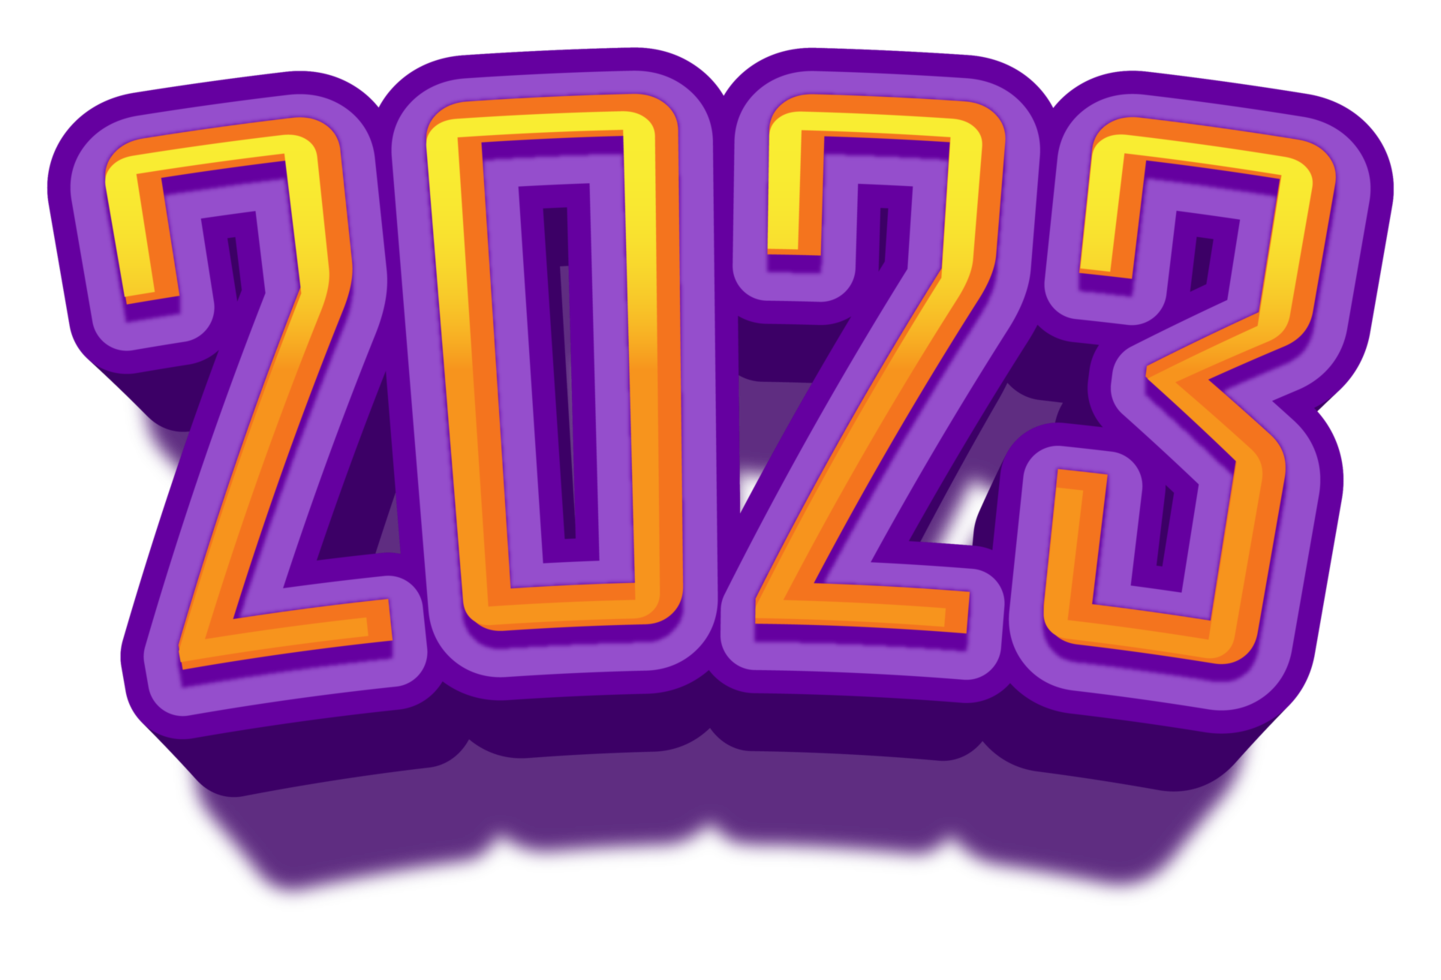 2023 Frohes neues Jahr Gold lila Text glitzert glänzend png